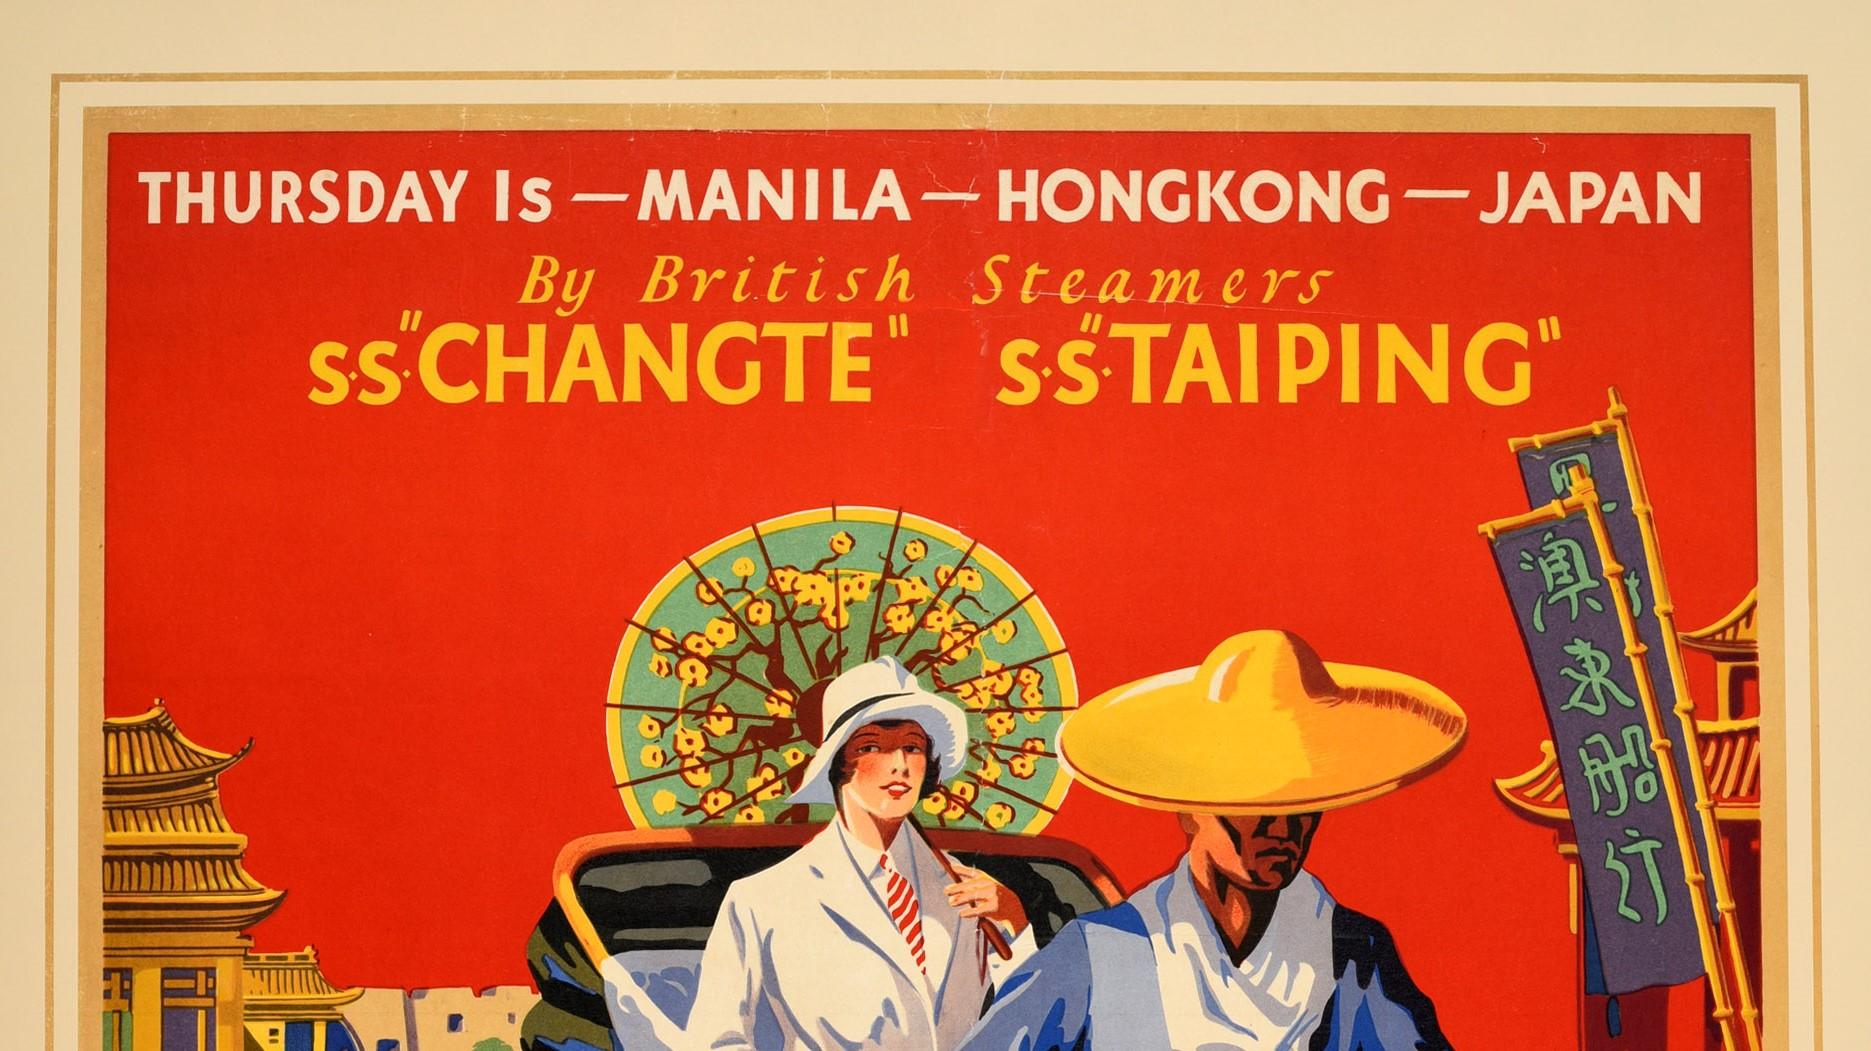 Original Vintage A.O Line Travel Poster - Thursday Island Manila Hong Kong Japan - Print by Steuart